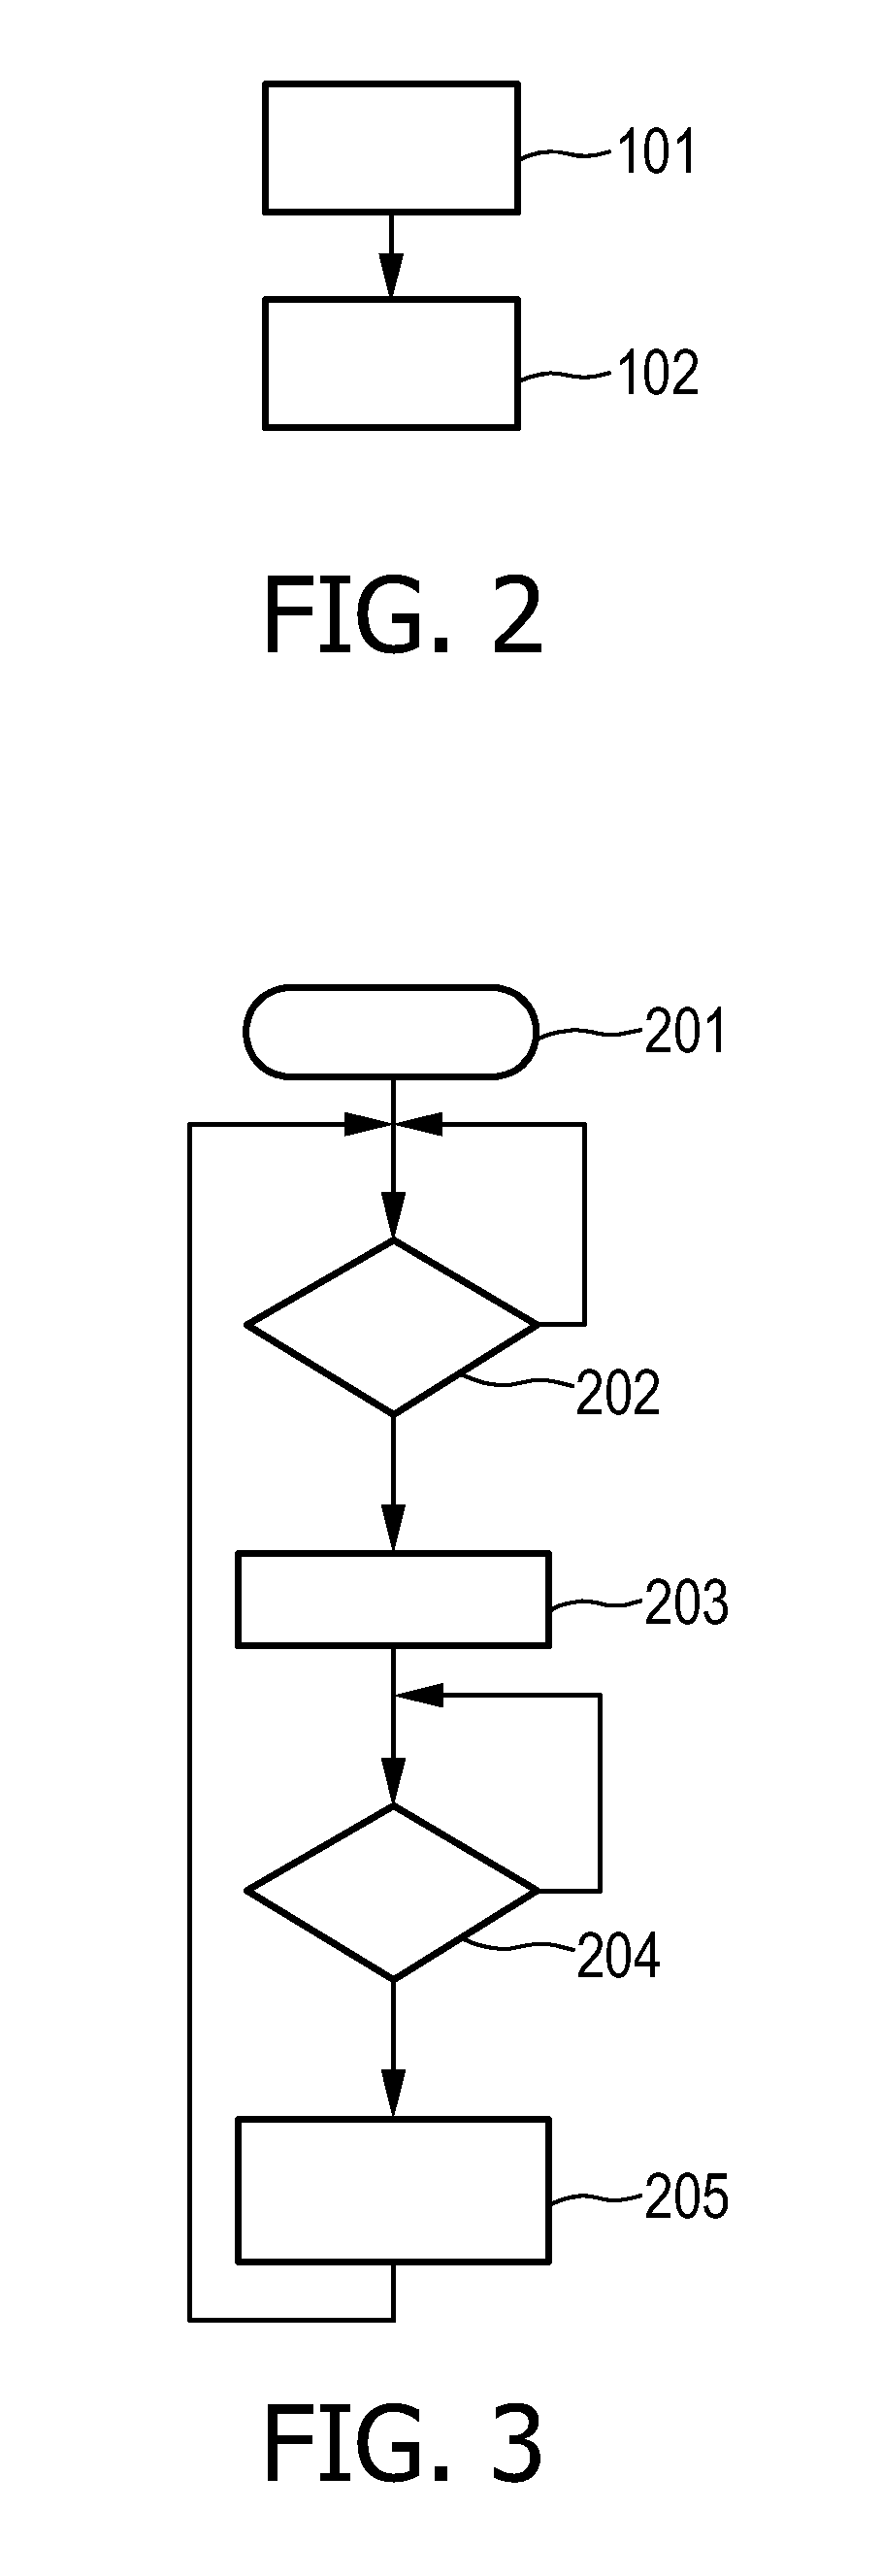 Apparatus for powering an electrical consumer via a data connection